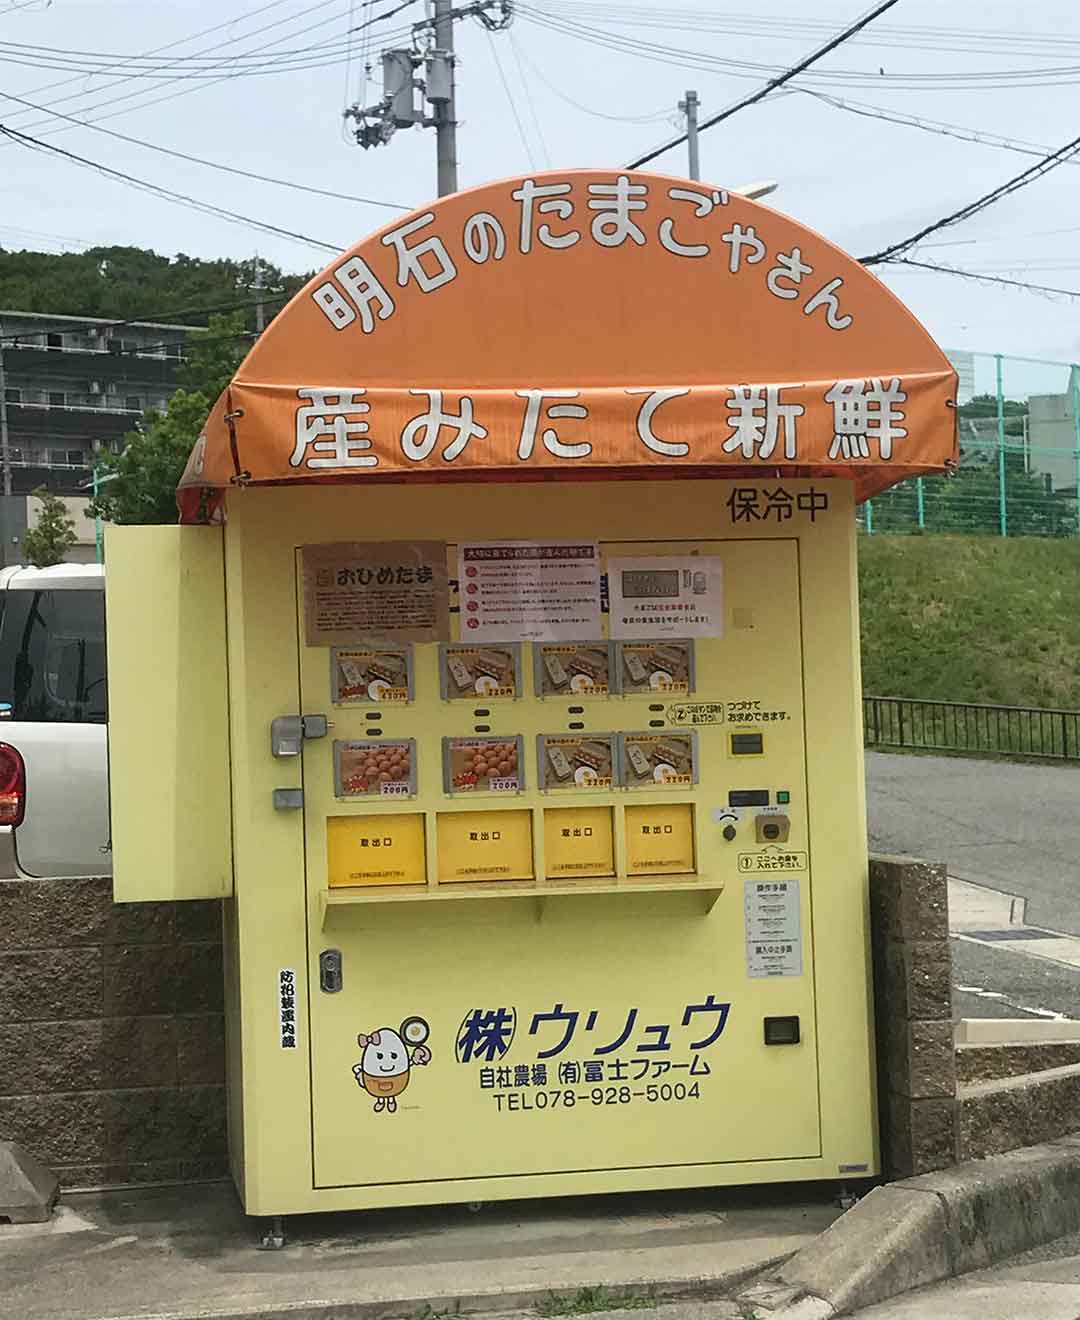 A Visual Exploration of Japan’s Vending Machine Culture